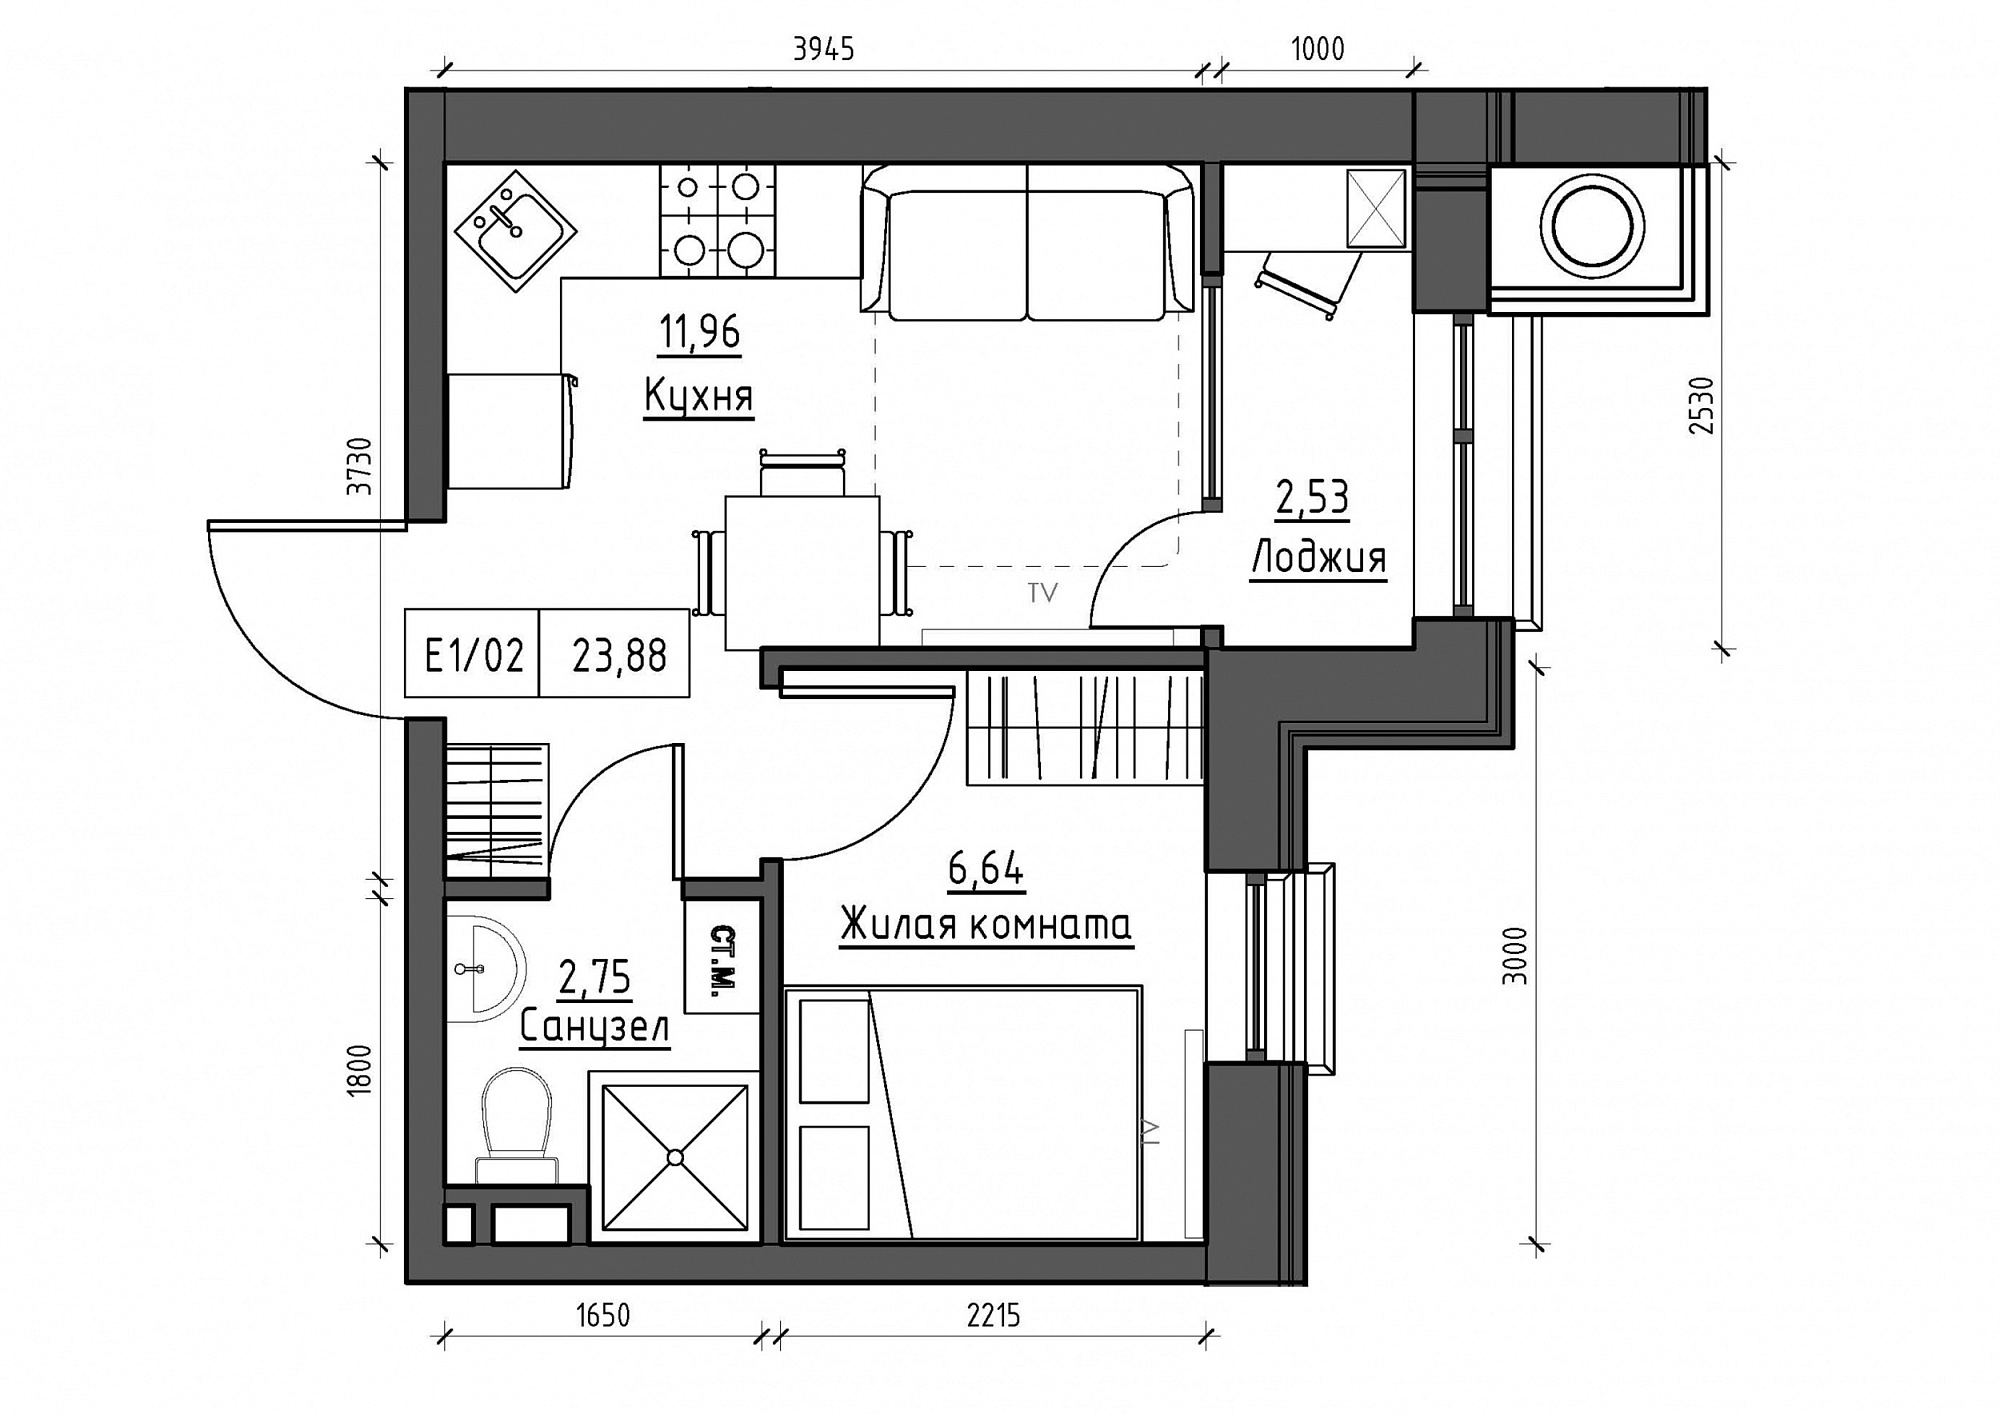 Planning 1-rm flats area 23.88m2, KS-012-02/0015.